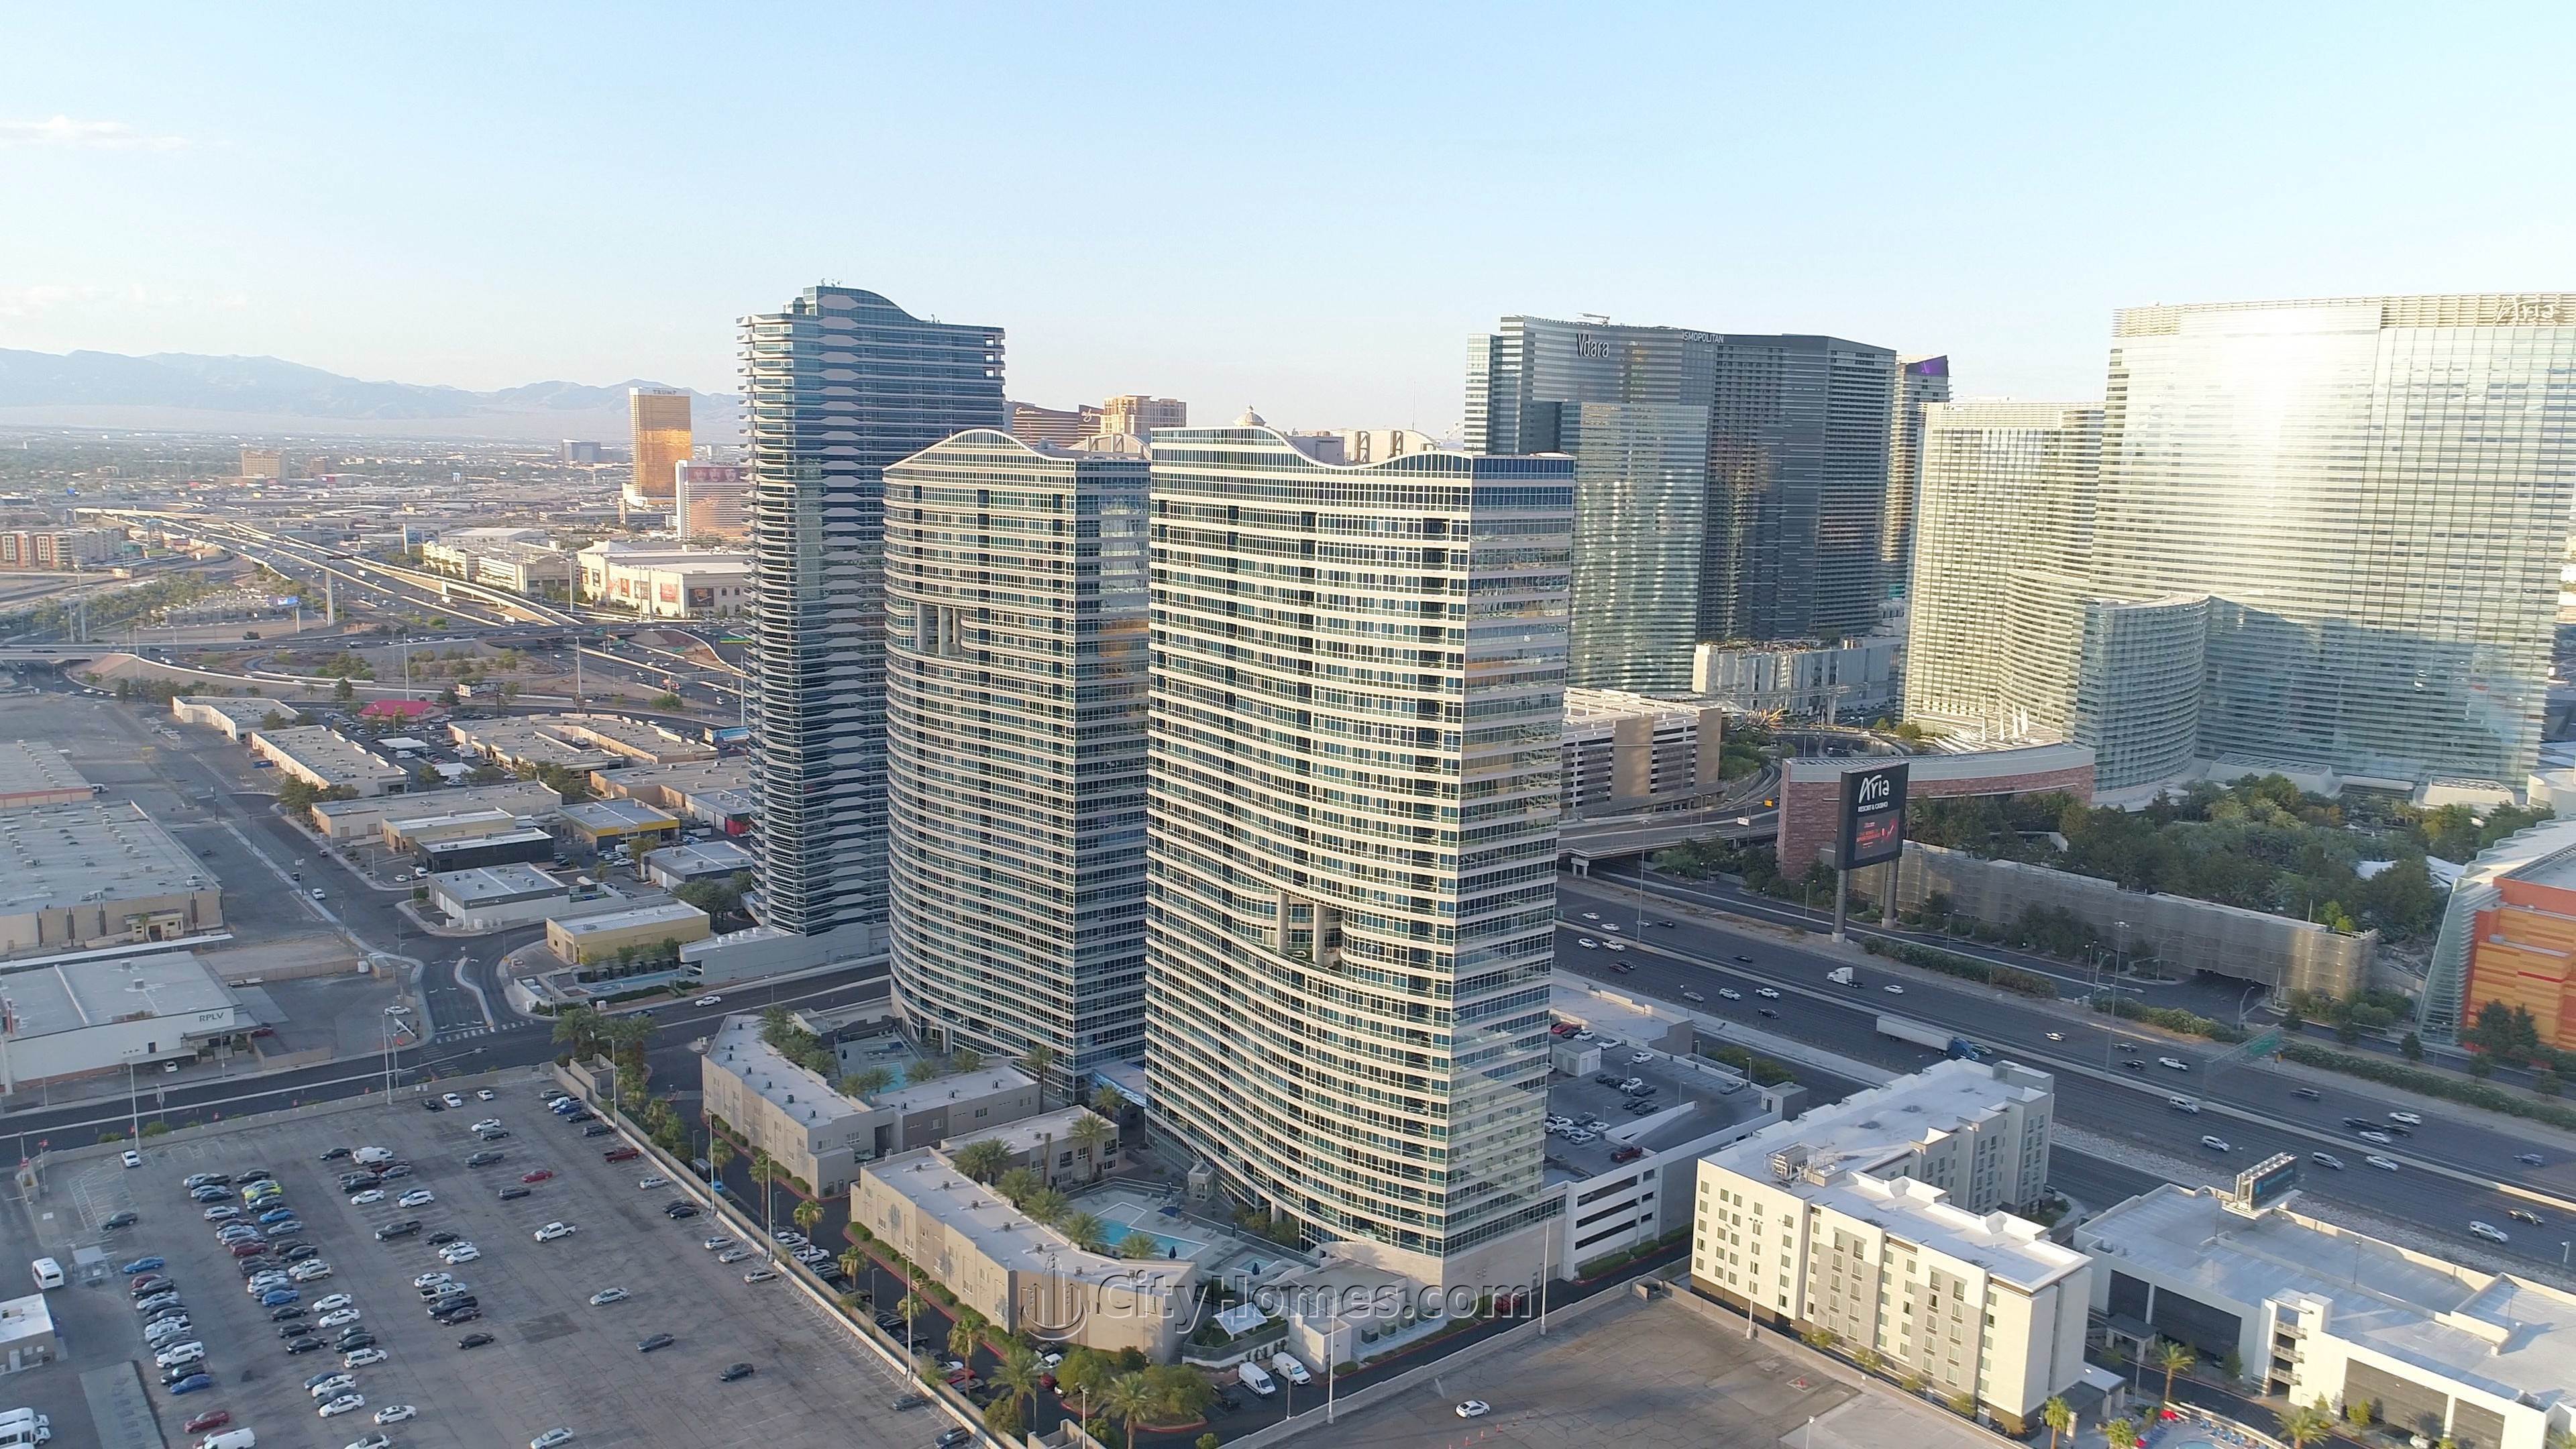 5. Panorama Towers building at 4525 Dean Martin Dr, Las Vegas, NV 89103